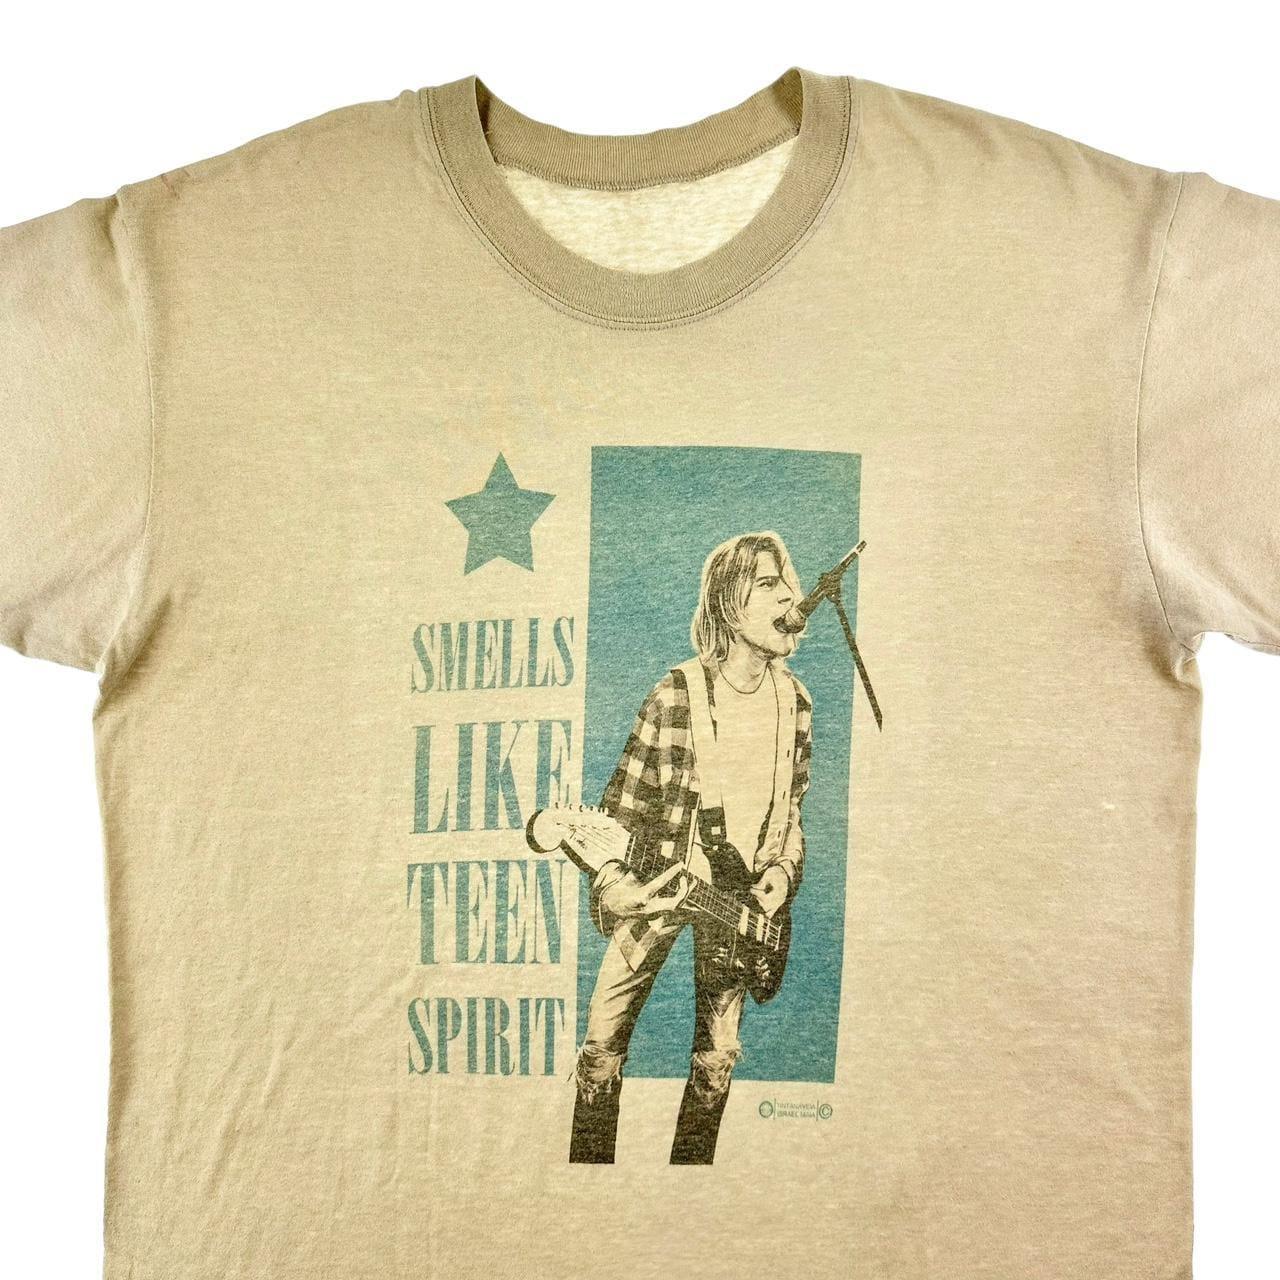 Vintage 90s Nirvana smells like teen spirit t shirt size M - Known Source